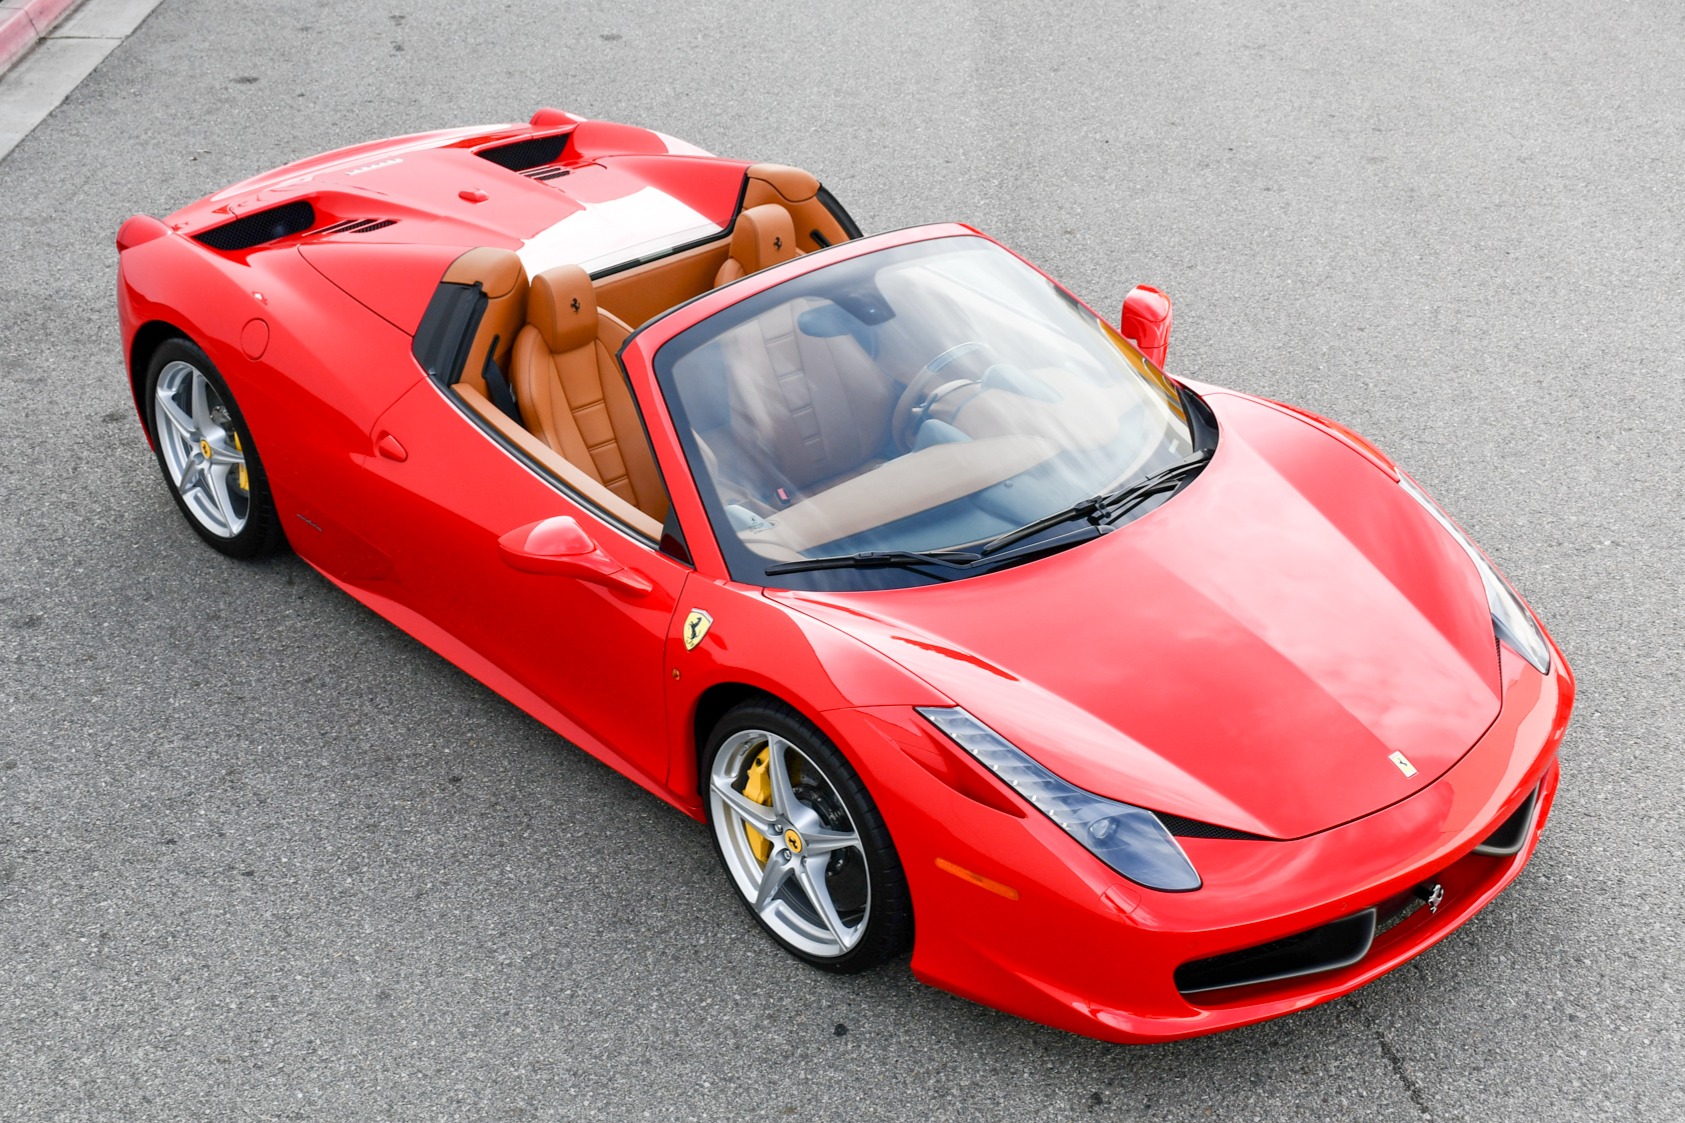 6k-Mile 2014 Ferrari 458 Spider for sale on BaT Auctions - closed on  November 30, 2022 (Lot #92,071) | Bring a Trailer